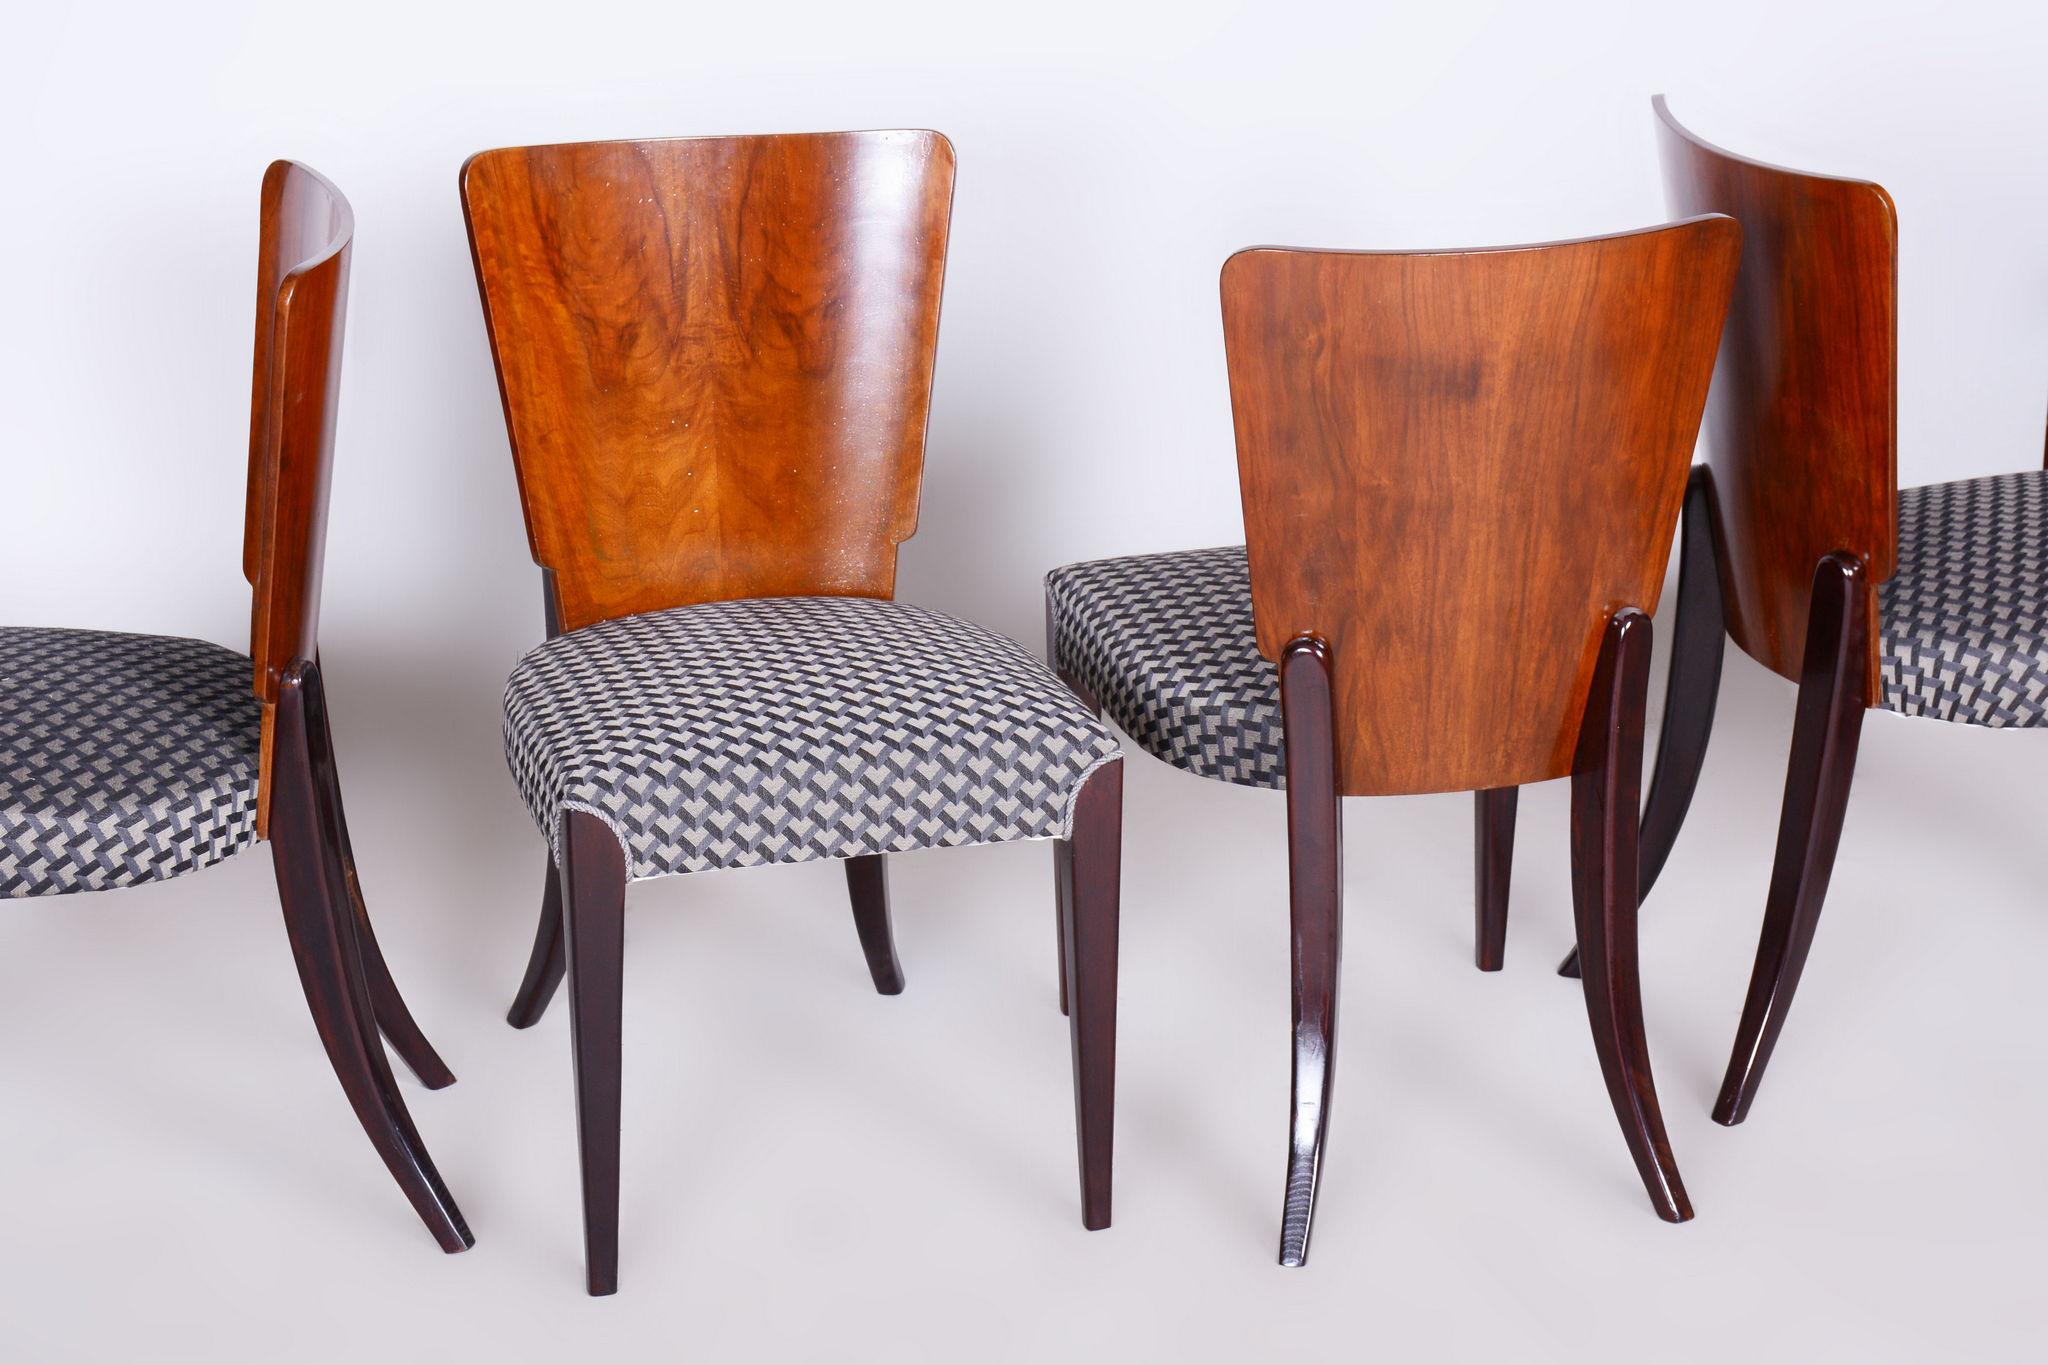 Set of Four Restored ArtDeco Chairs, Halabala, UP Zavody, Beech, Czechia, 1930s In Good Condition For Sale In Horomerice, CZ